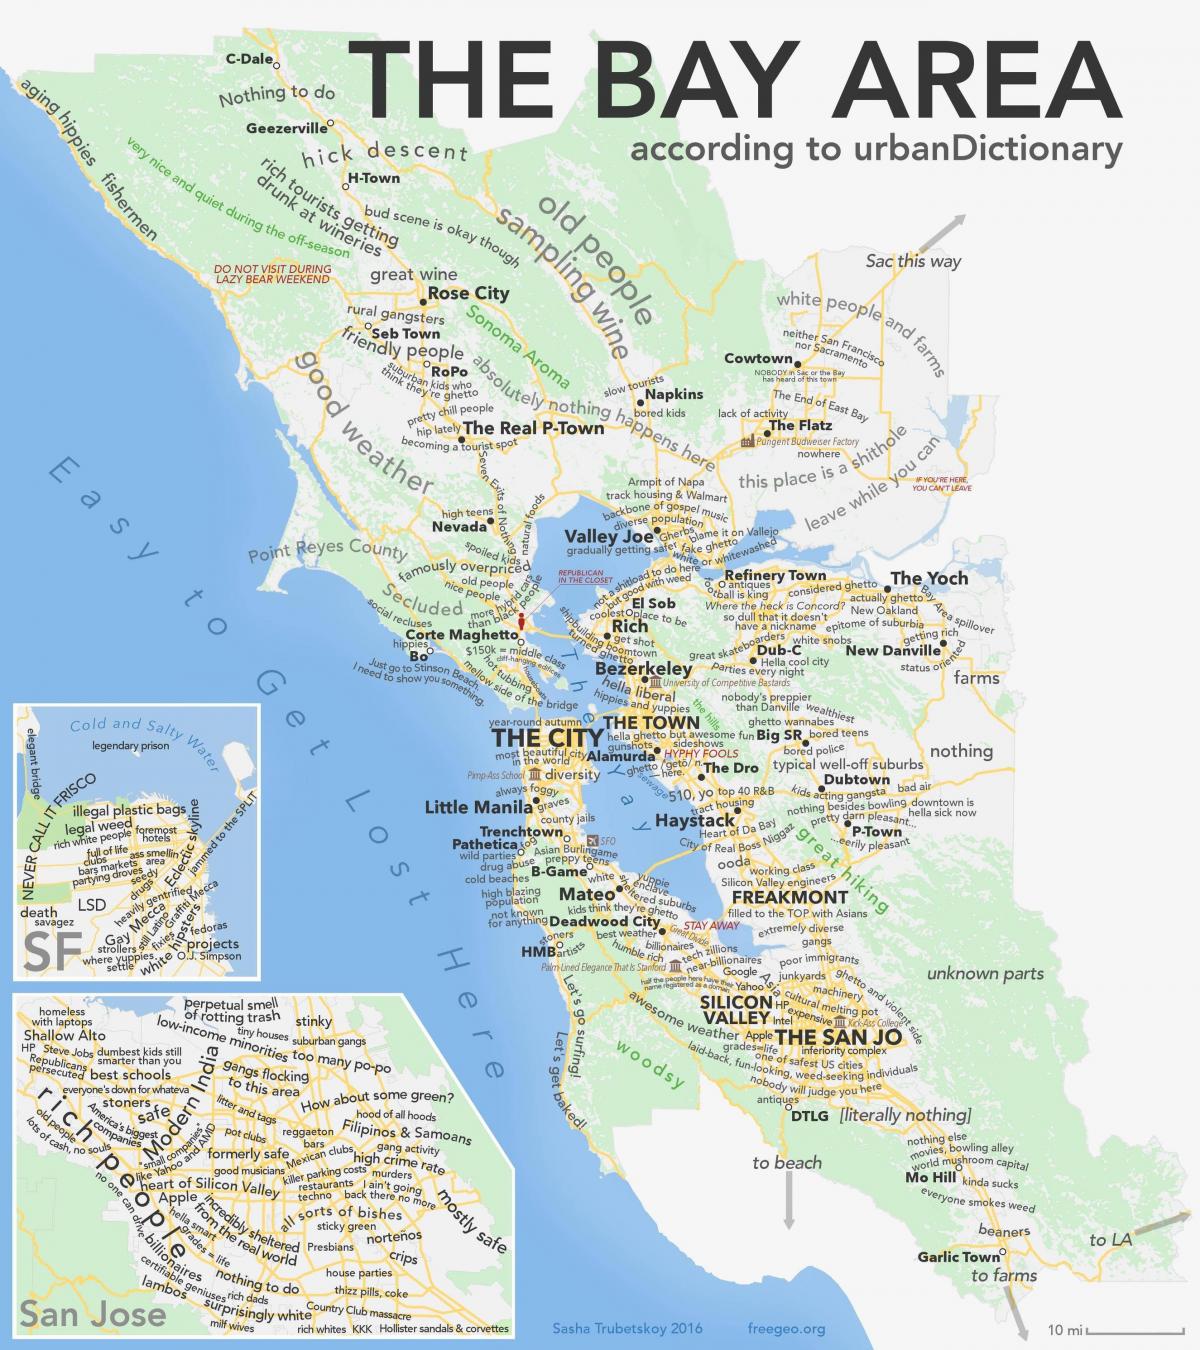 San Francisco arlo mapa